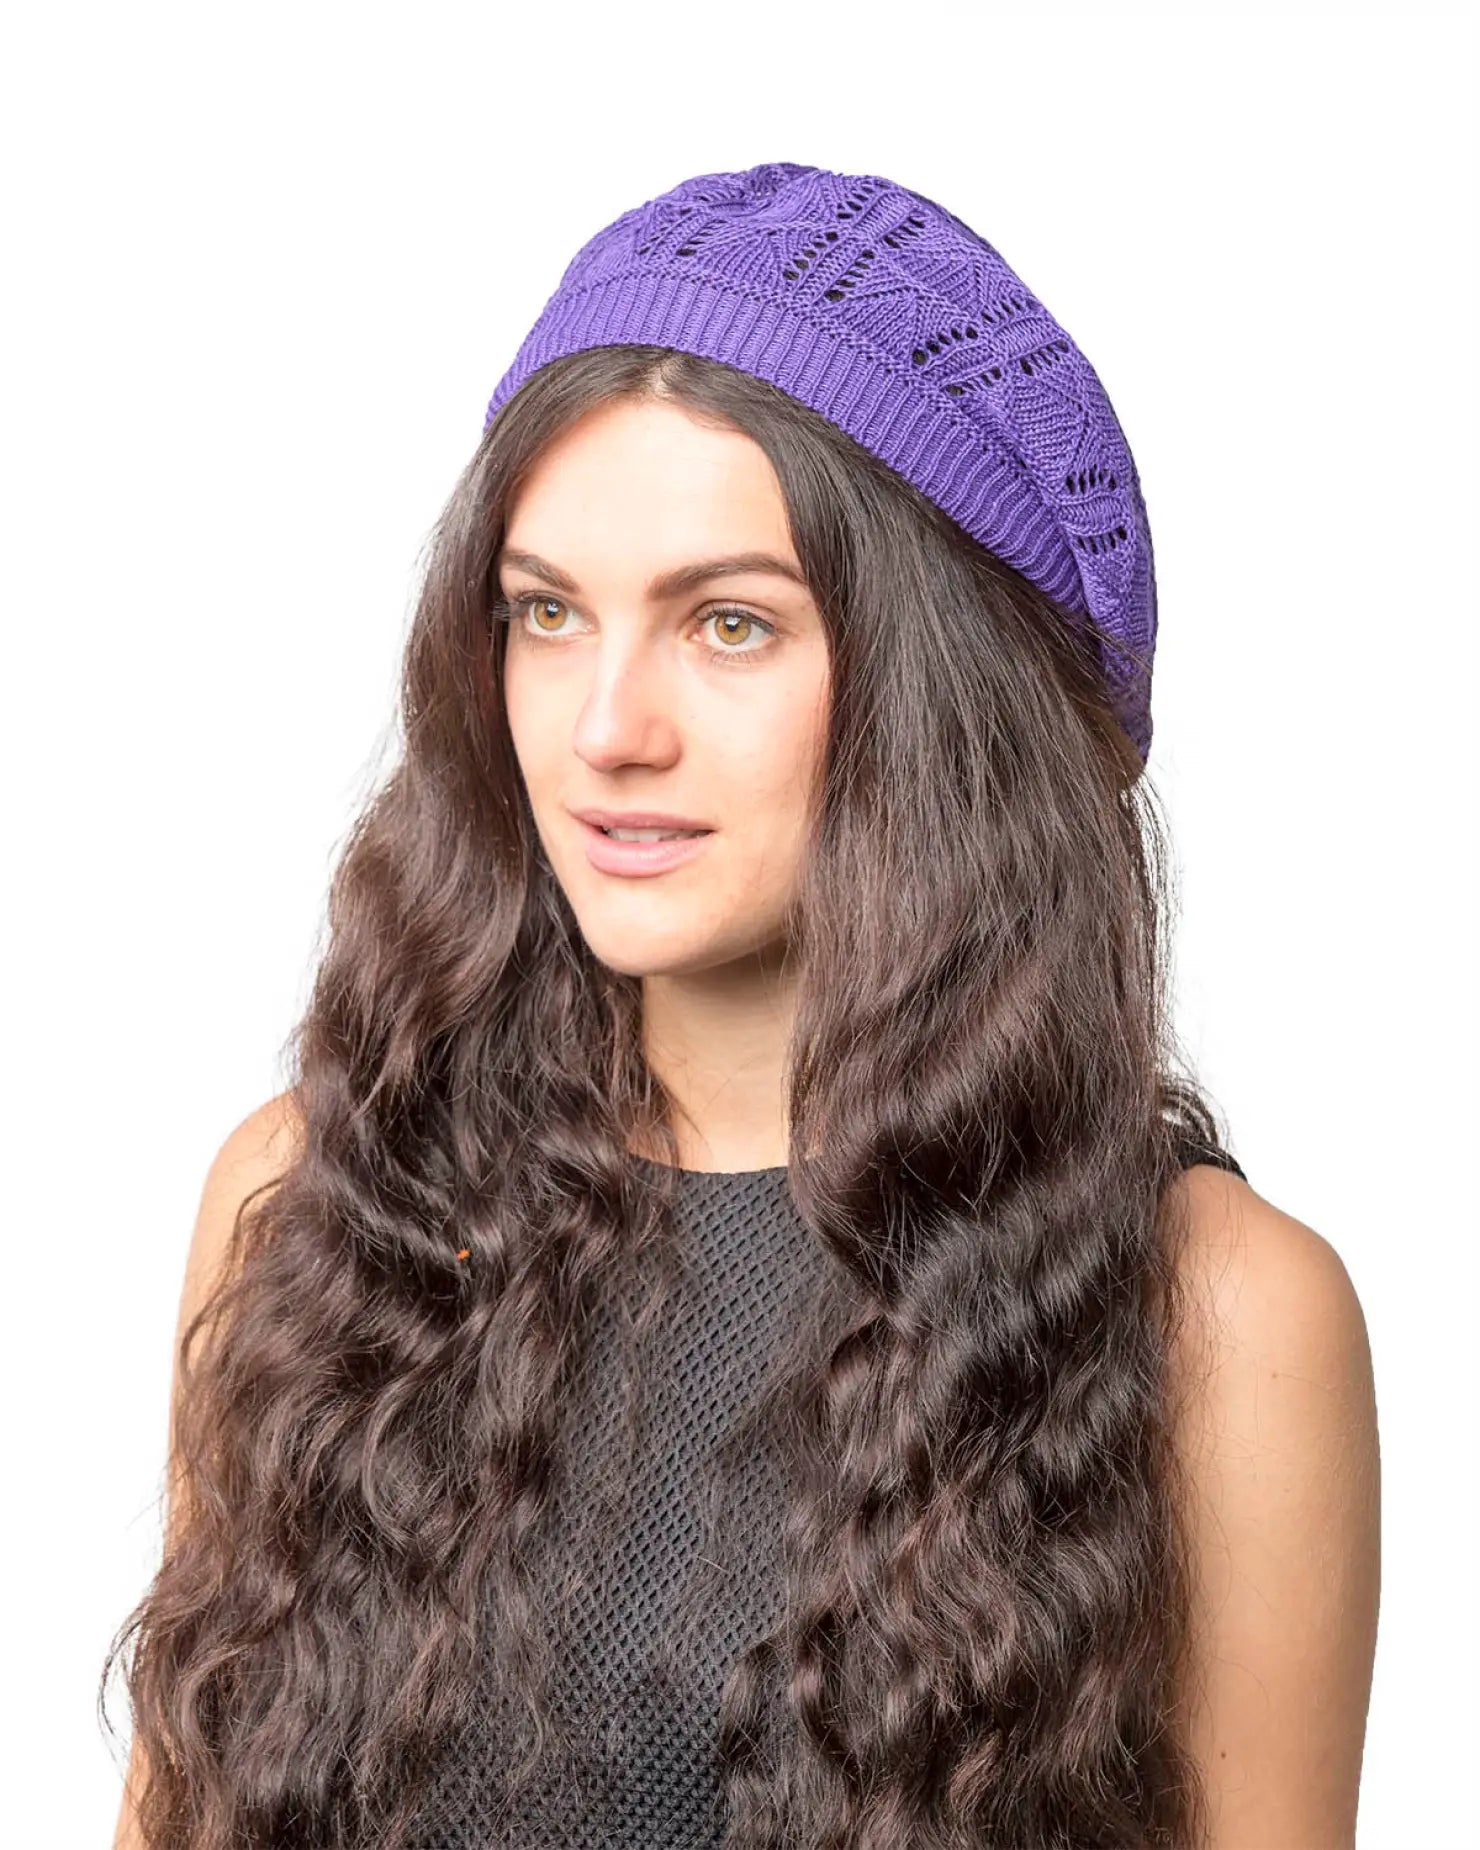 Woman wearing purple hat with black top in Women’s Triangle Design Knitted Crochet Beanie Hat.